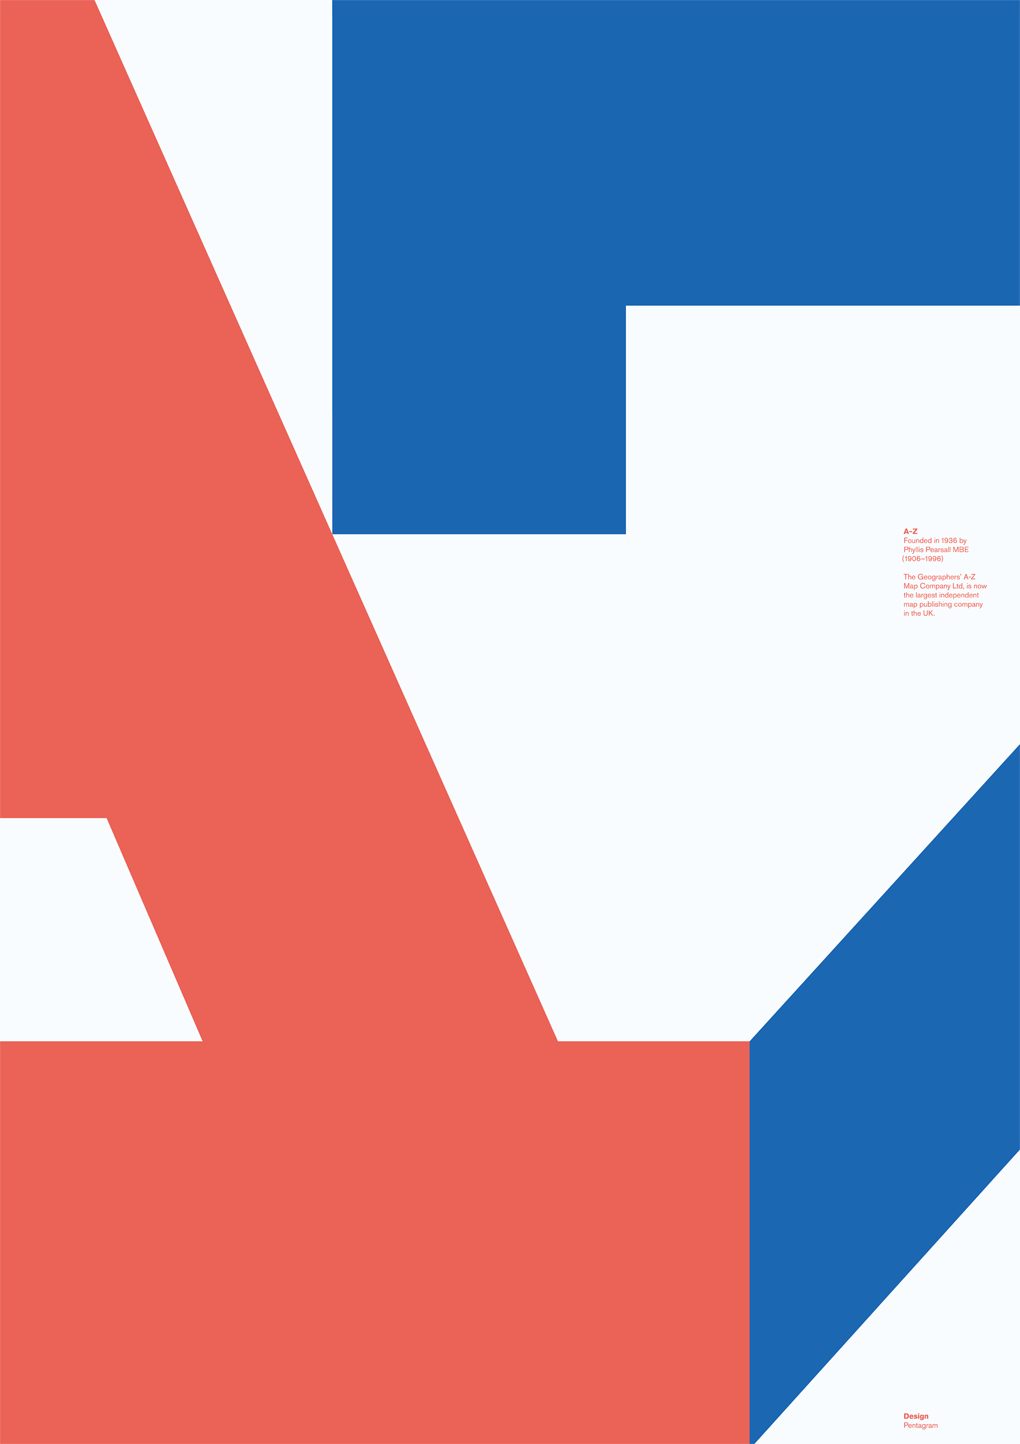 Pentagram’s A-Z Poster